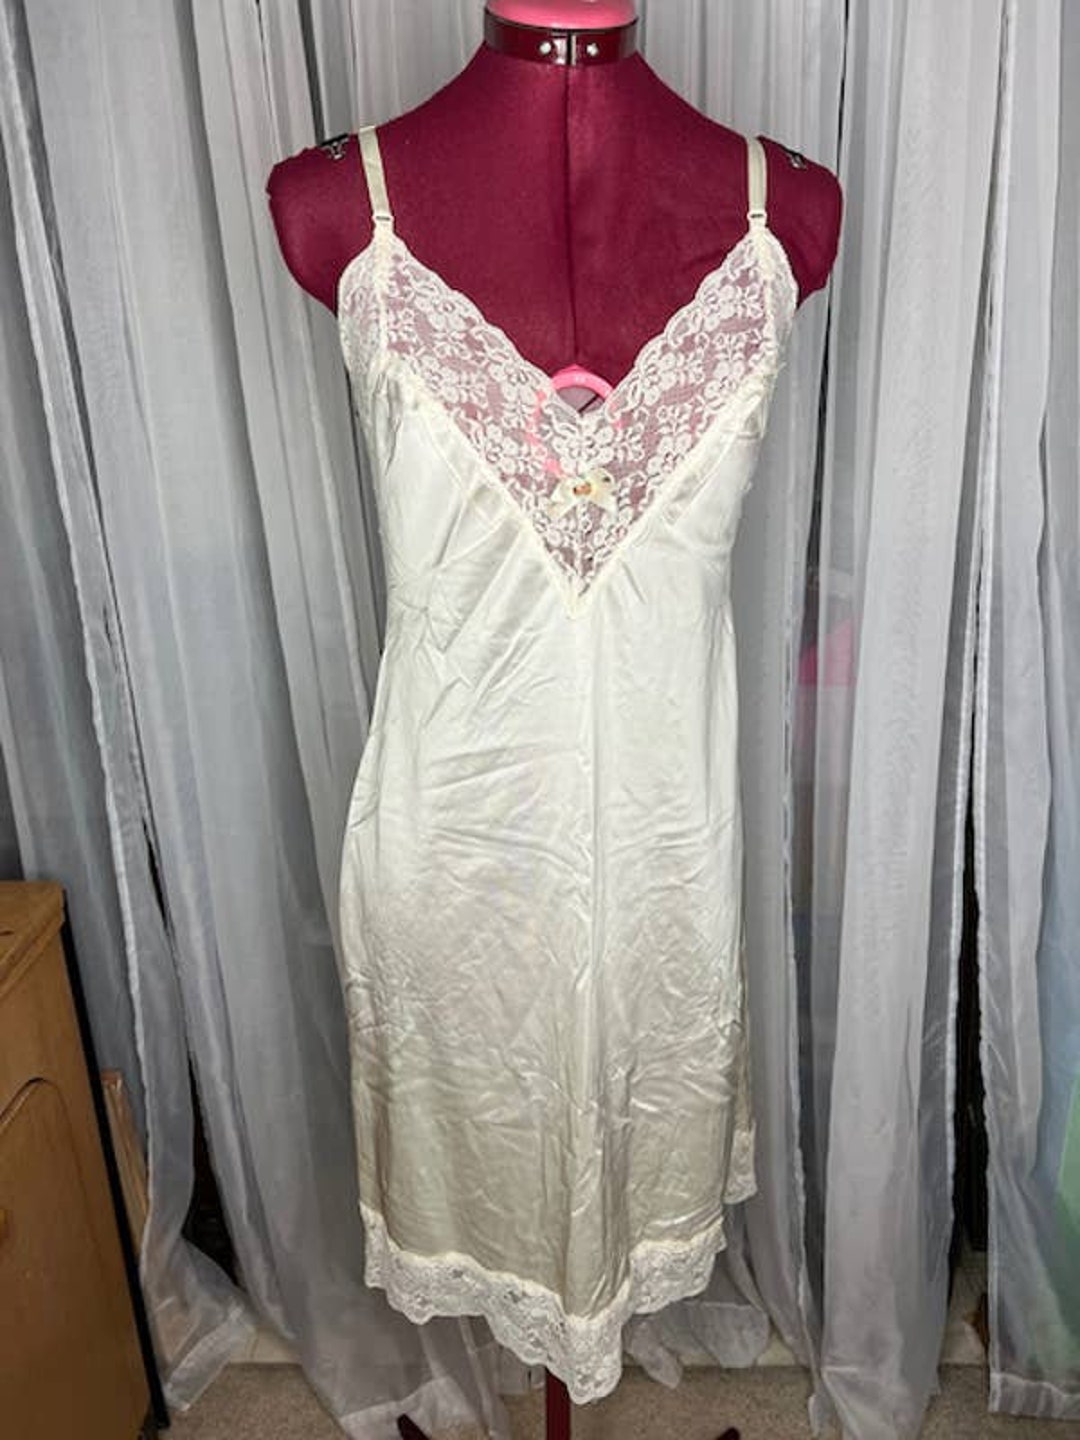 BEAUTELICATE Women 100% Dress Slip Cotton Slip Under Dress Above Knee Full  Slip Adjustable Straps Nightgown at Amazon Women's Clothing store